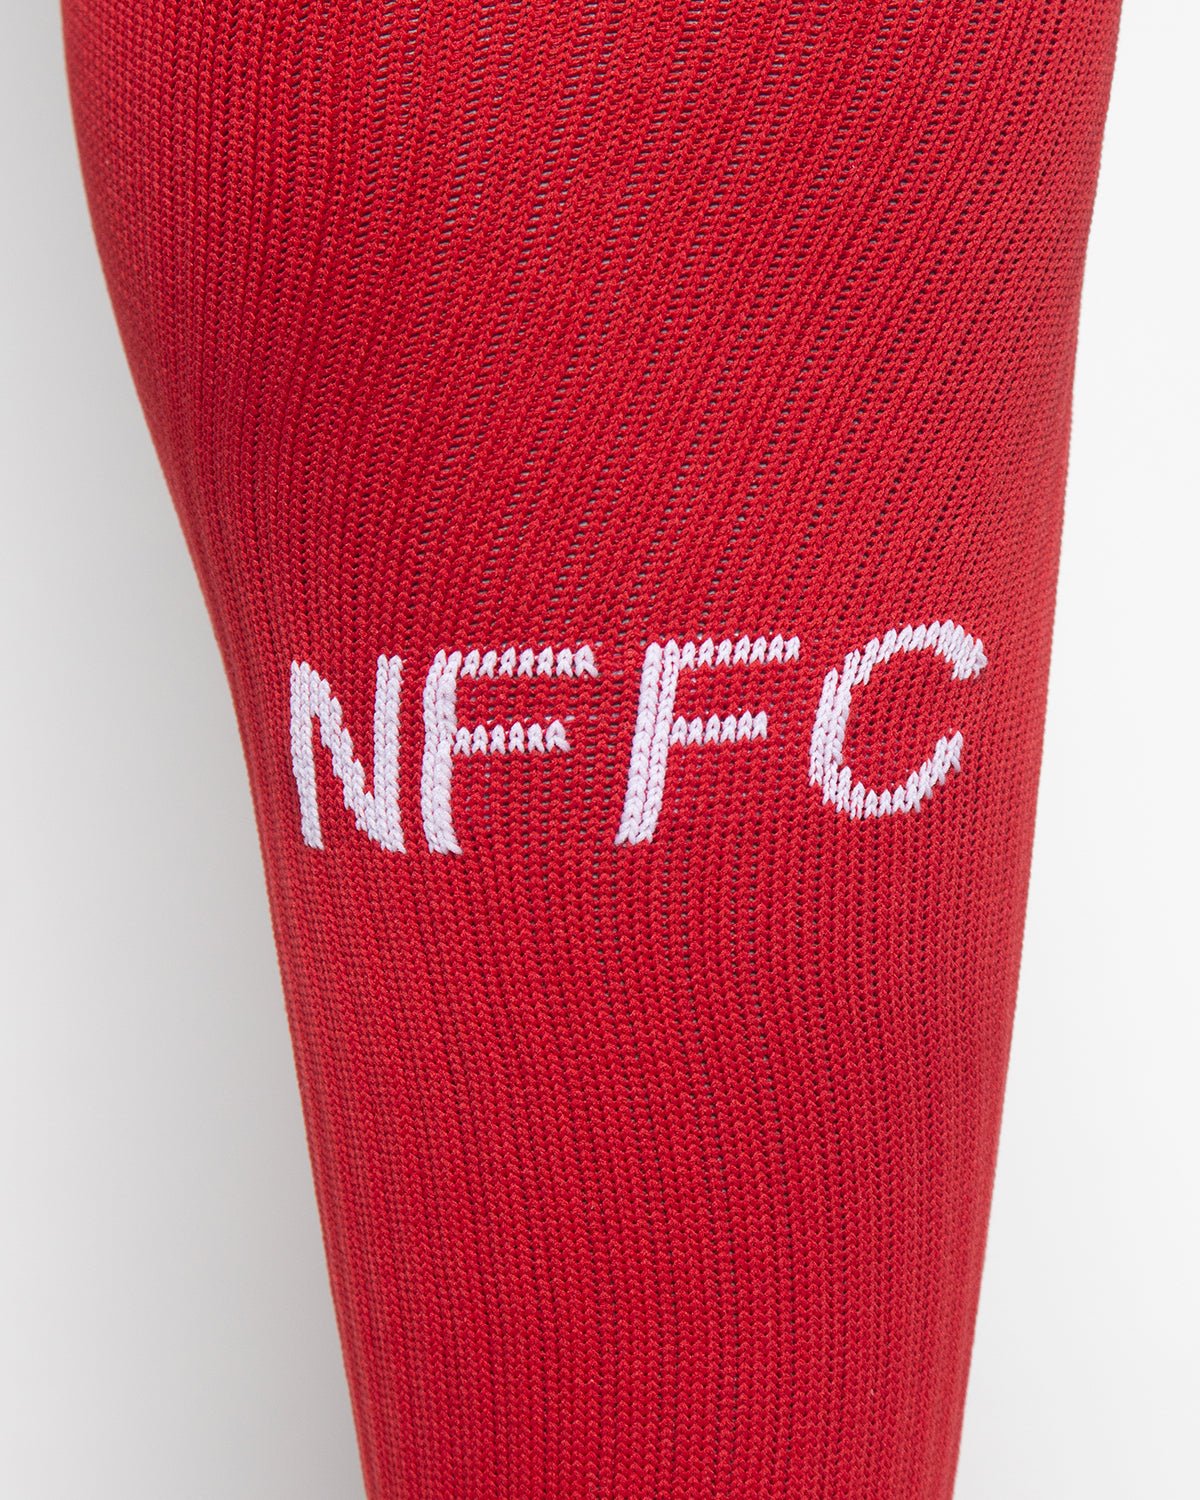 NFFC Junior Home Socks 23-24 - Nottingham Forest FC